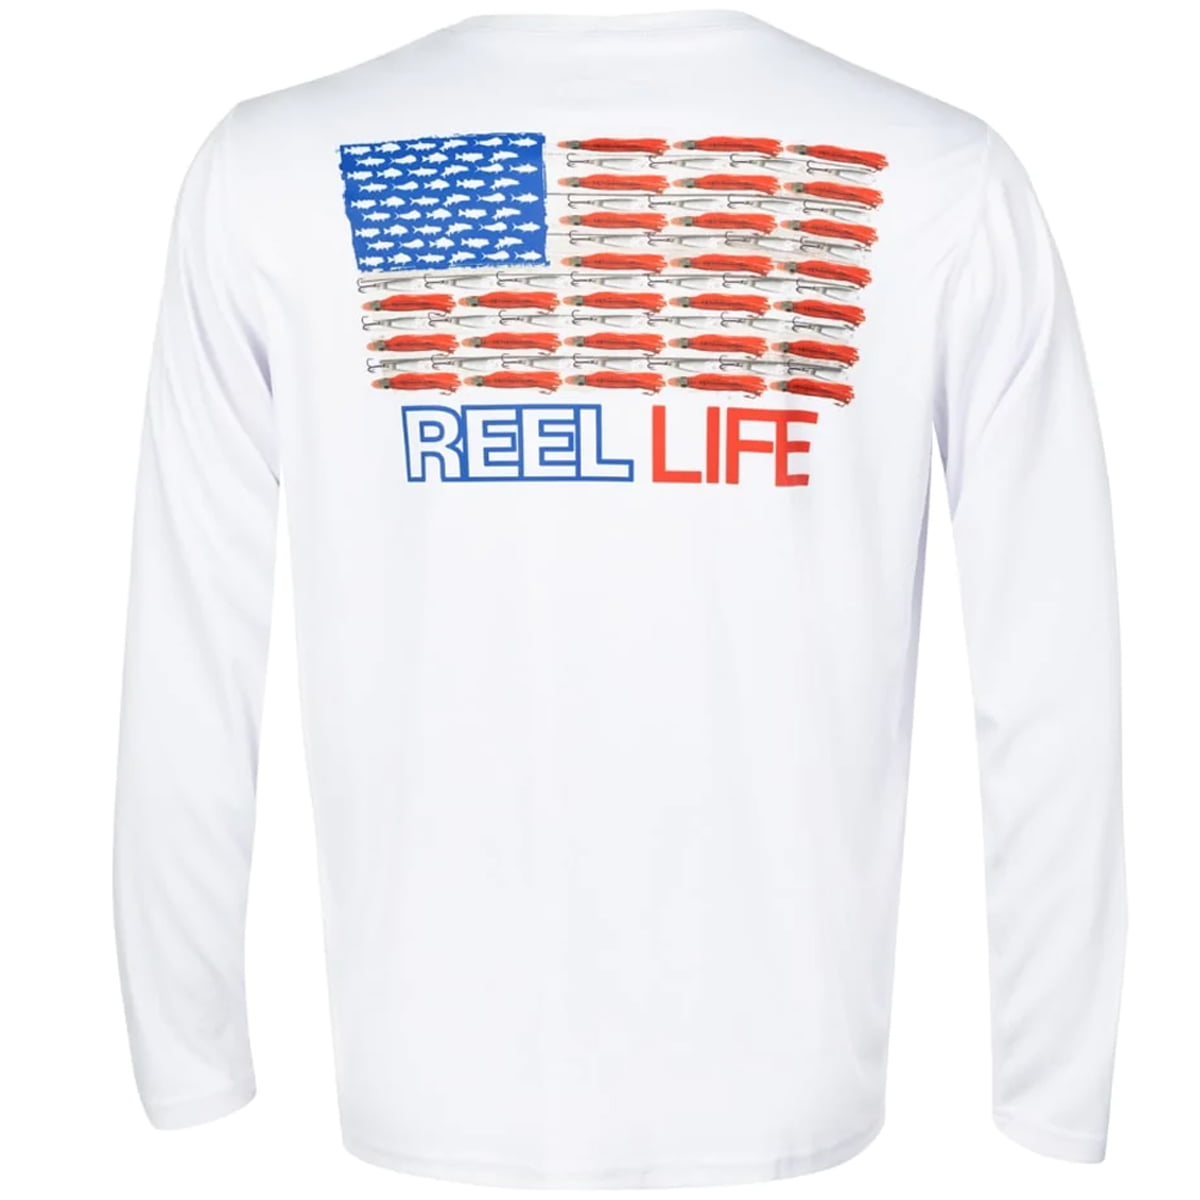 Reel Life Merica UV Long Sleeve Performance T-Shirt - Small - White